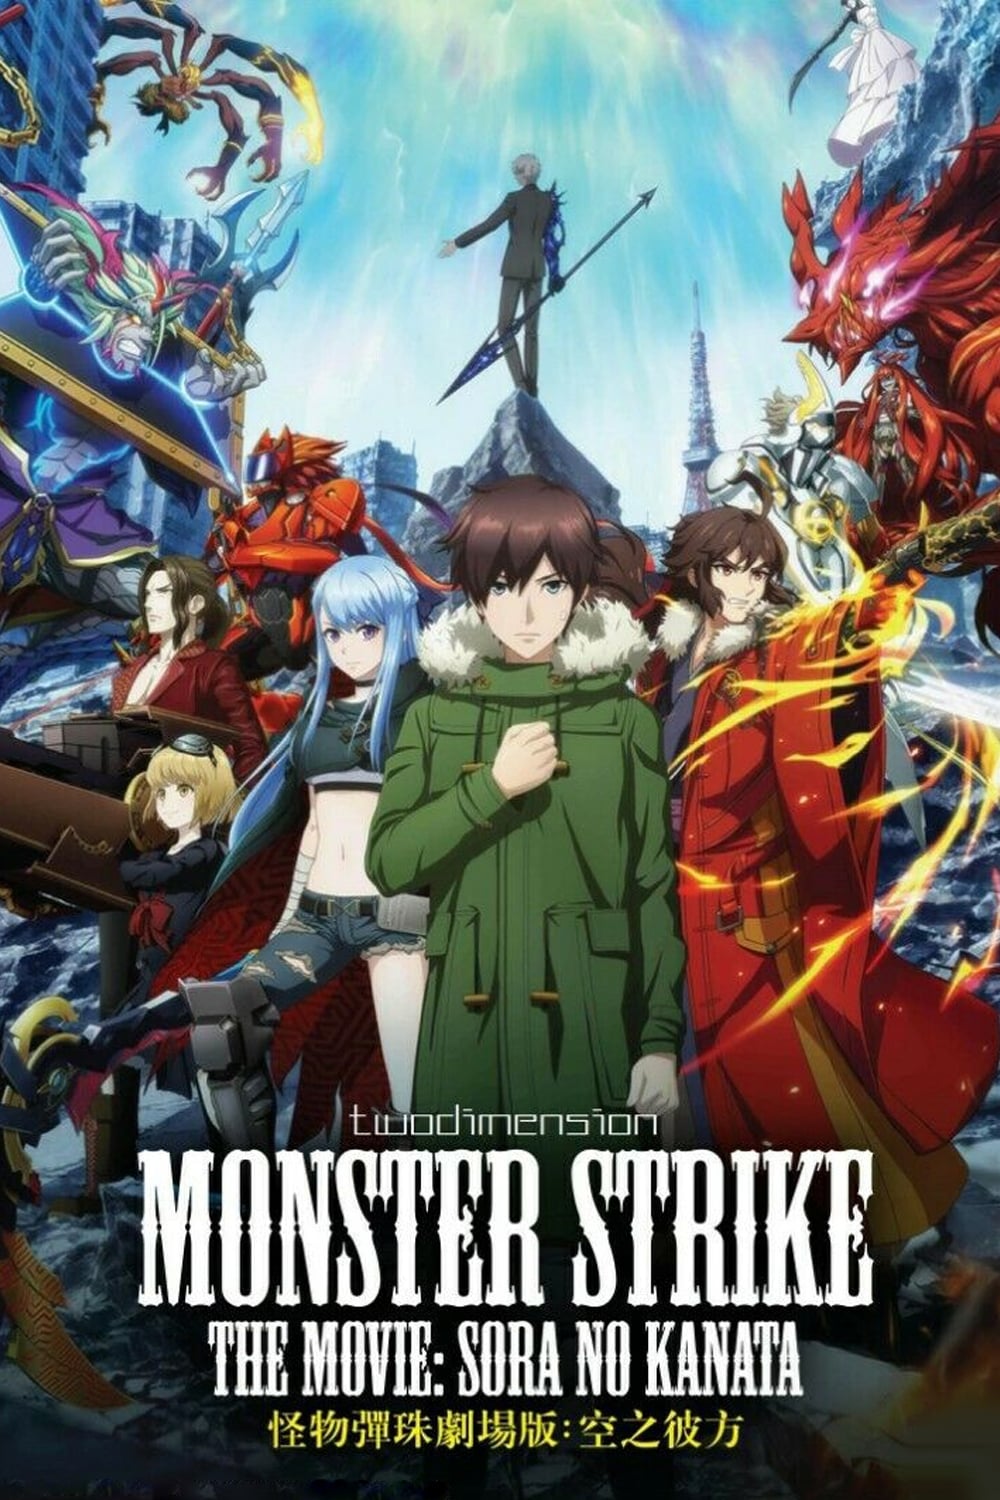 Assistir Monster Strike the Movie: Sora no Kanata Online completo